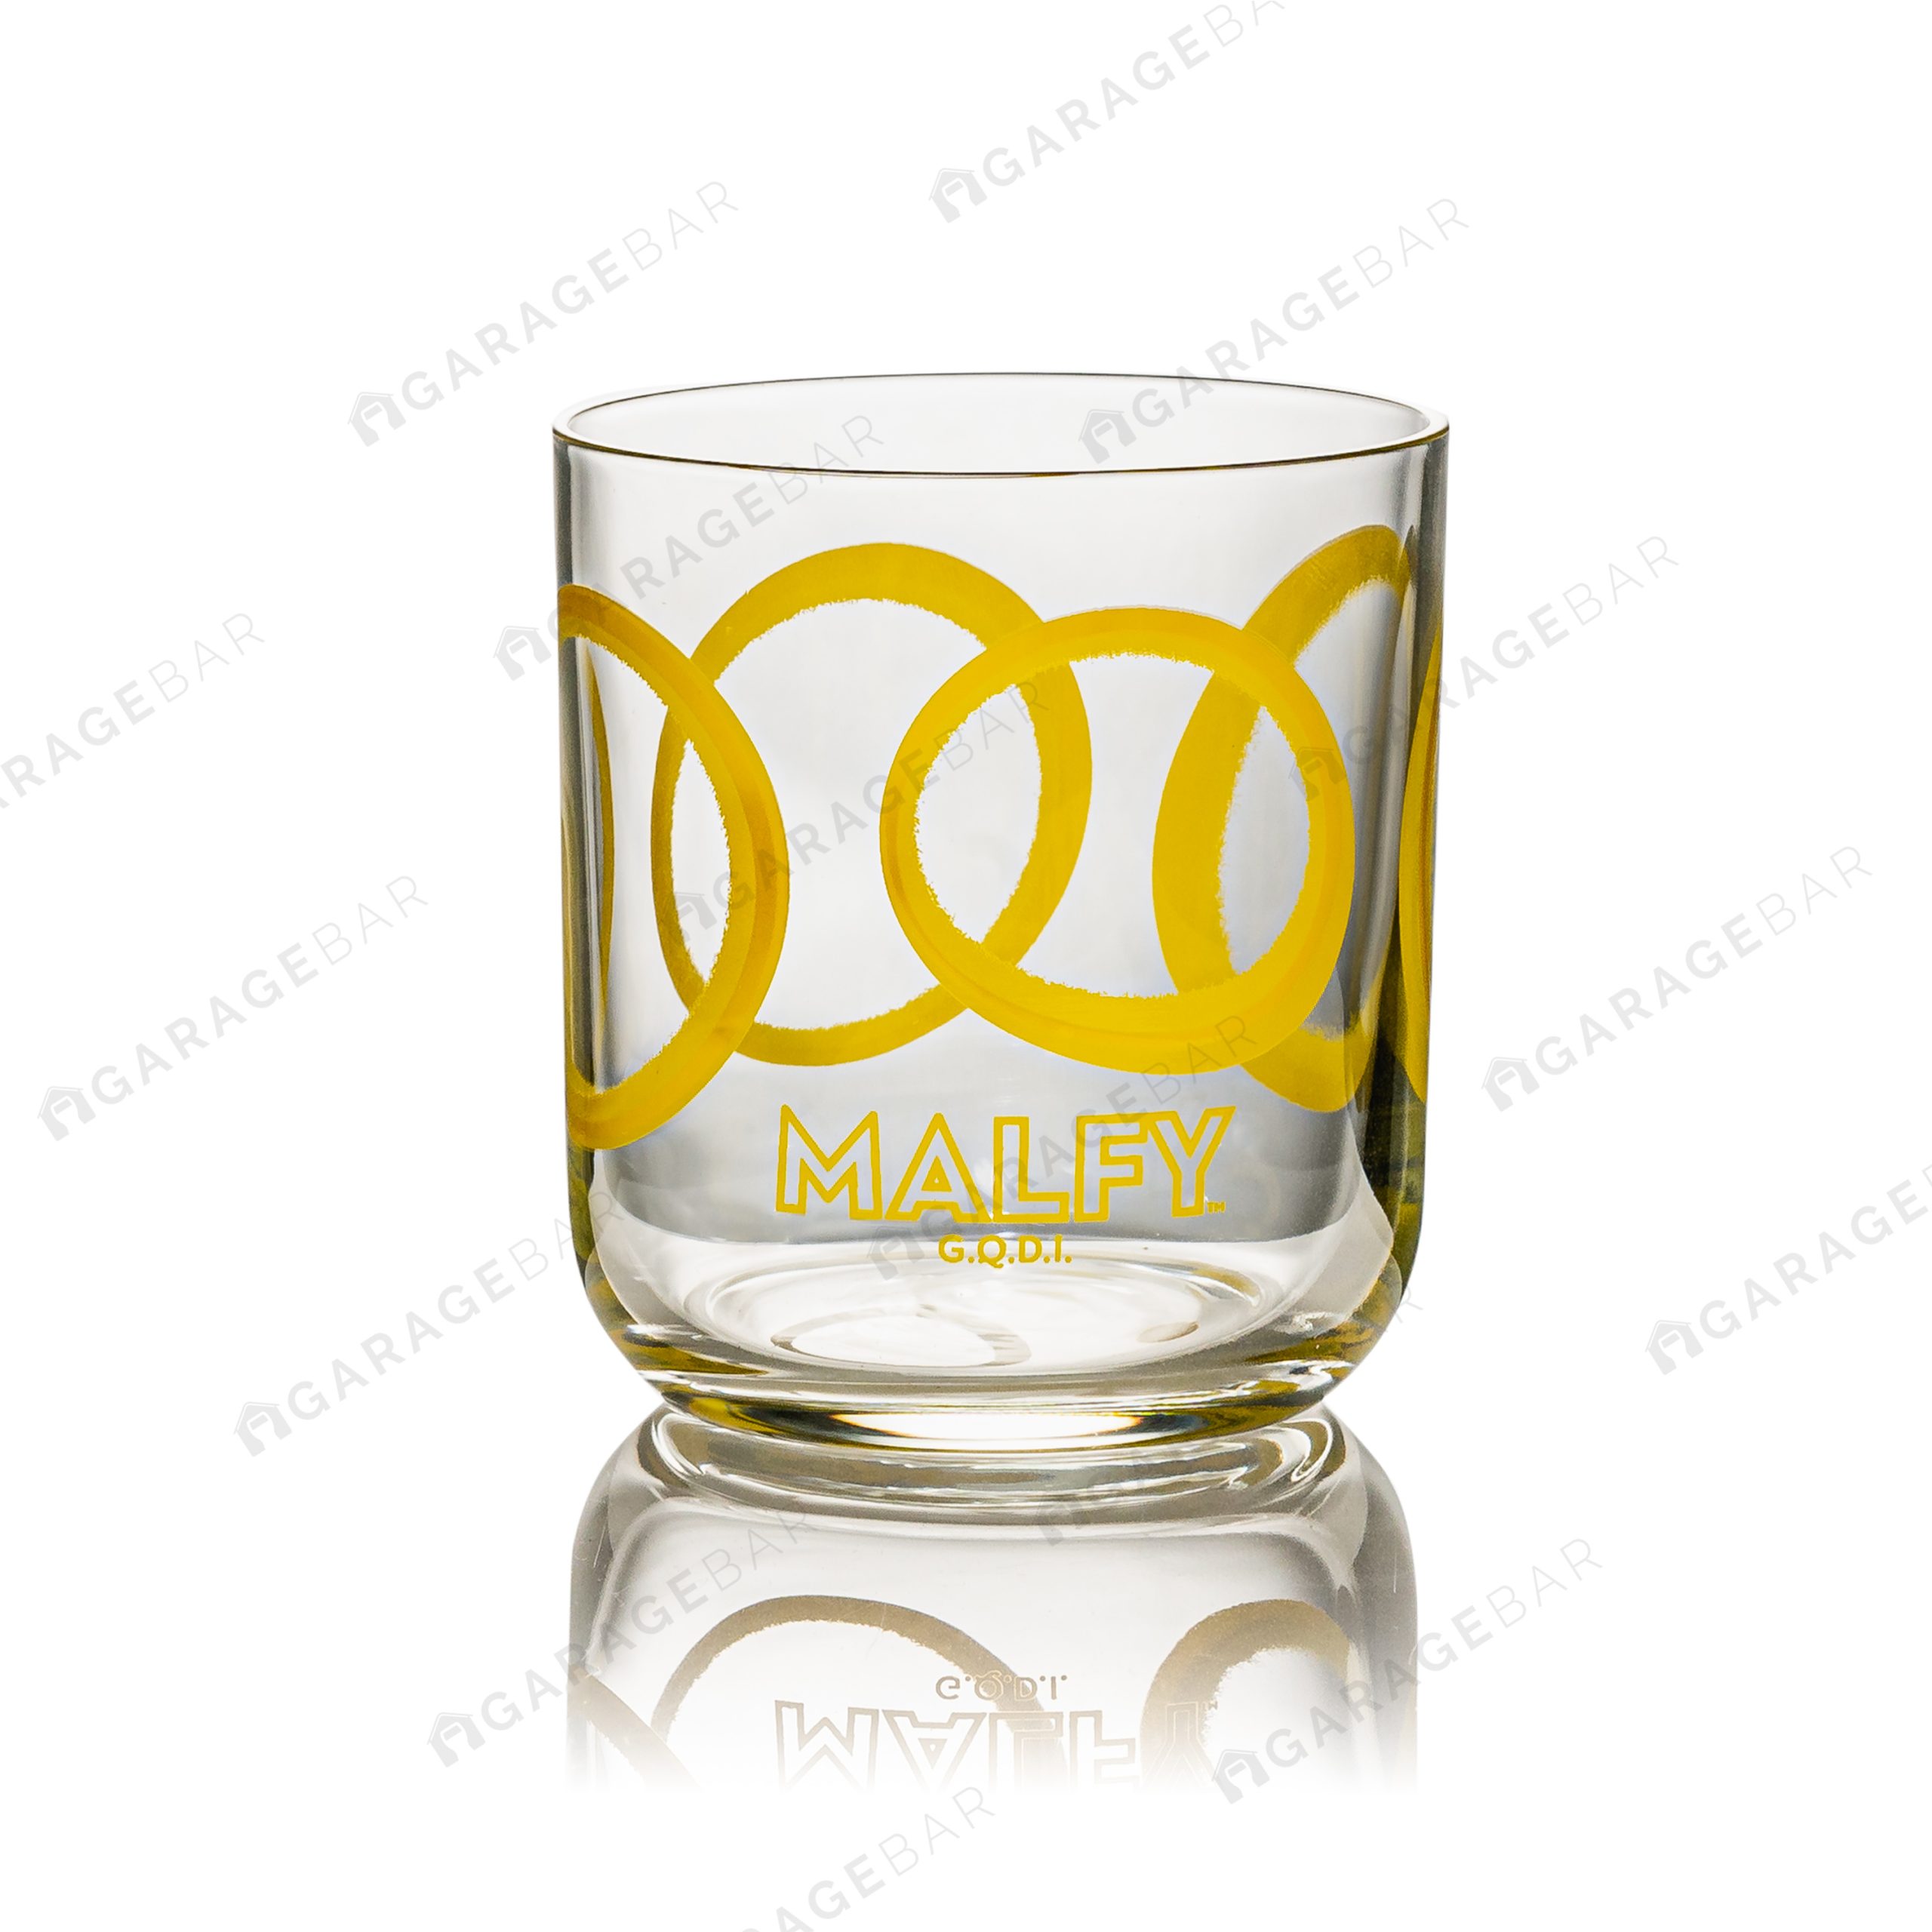 Malfy Gin Tumbler Glass